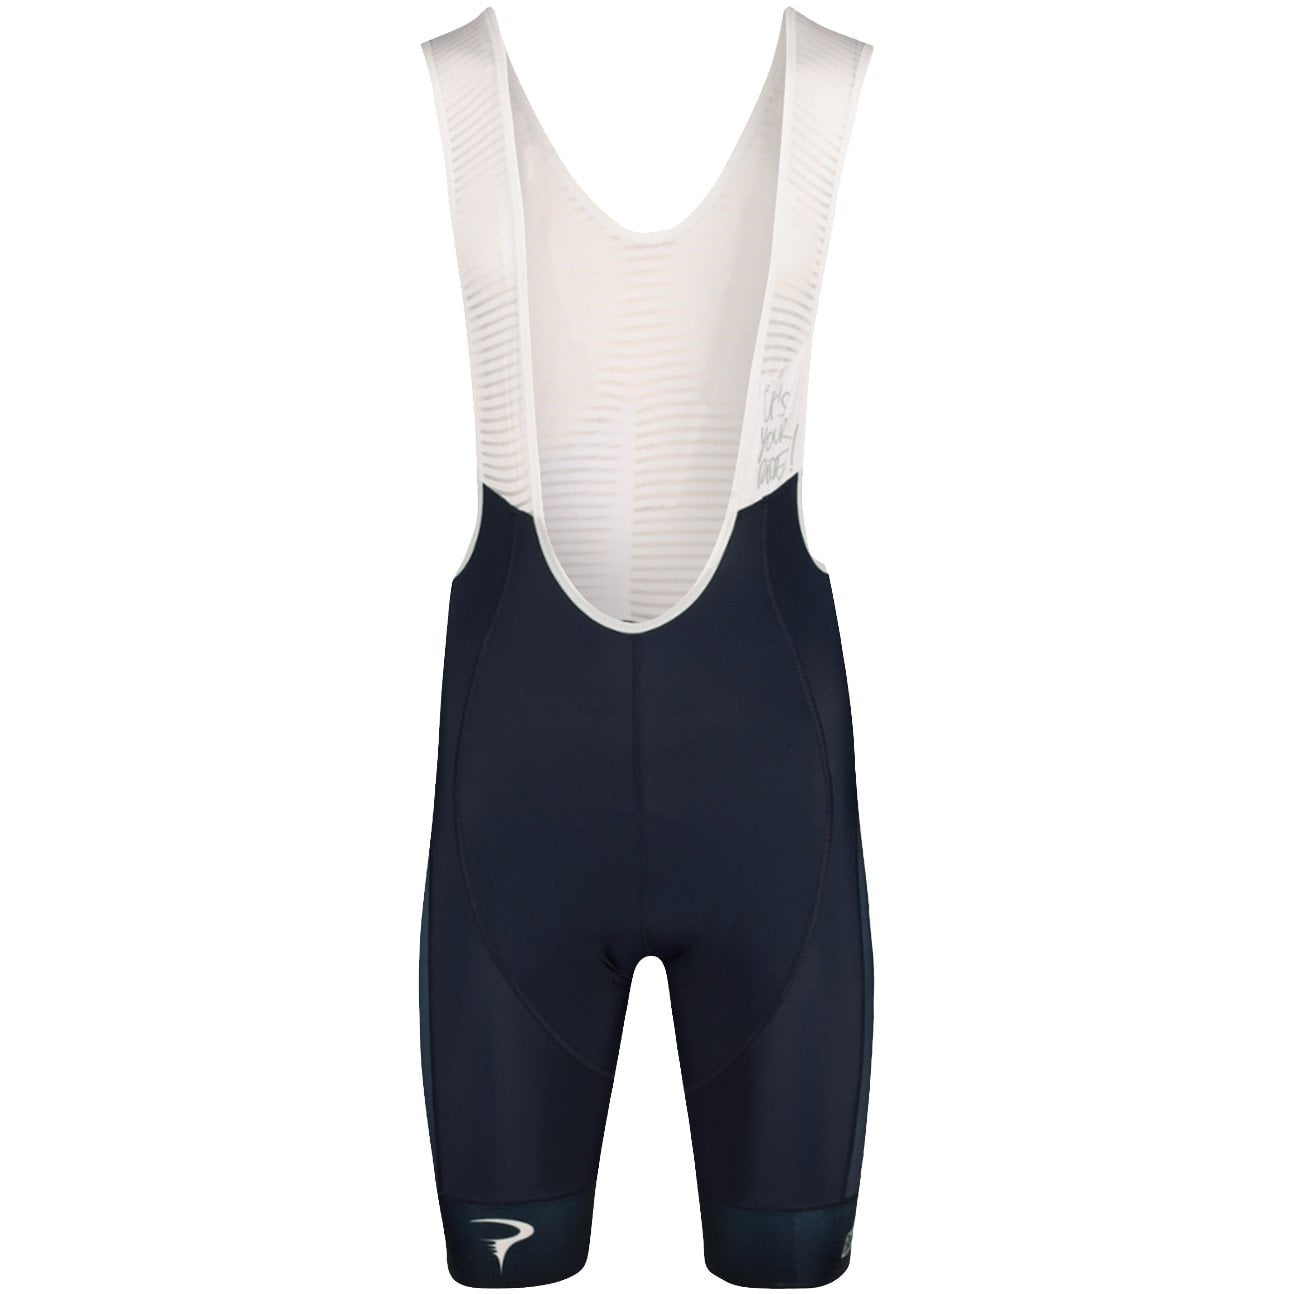 INEOS Grenadiers Icon 2023 Bib Shorts, for men, size M, Cycle shorts, Cycling clothing